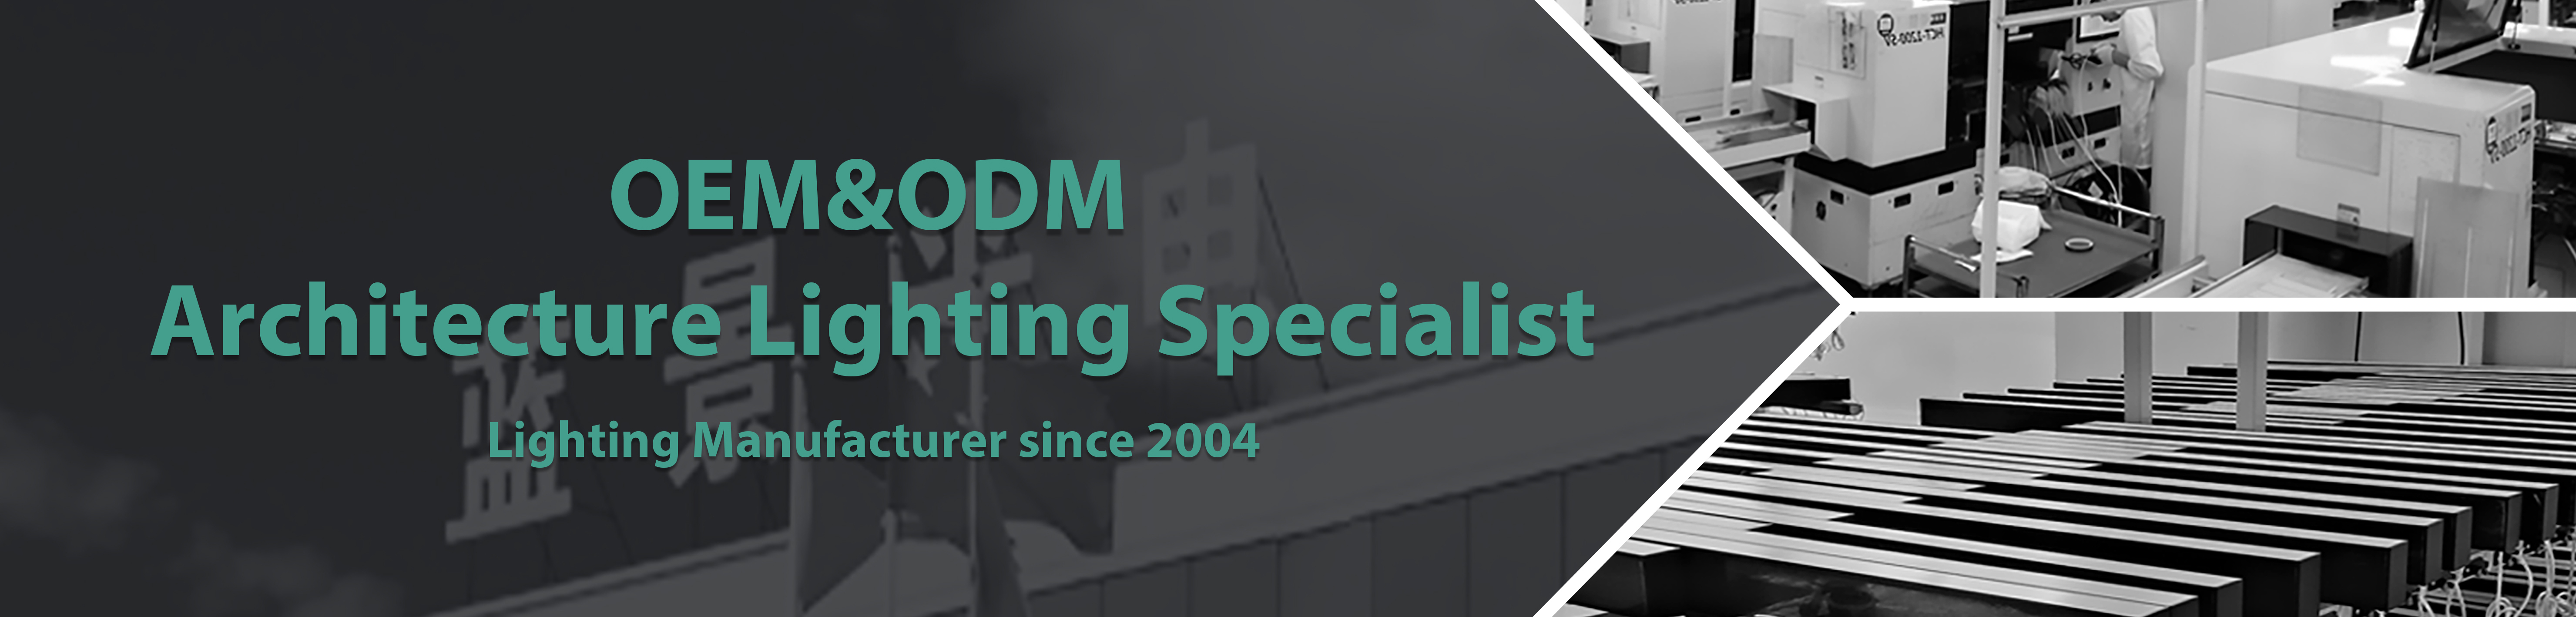 OEM&ODM Architecture Lighting Specialist